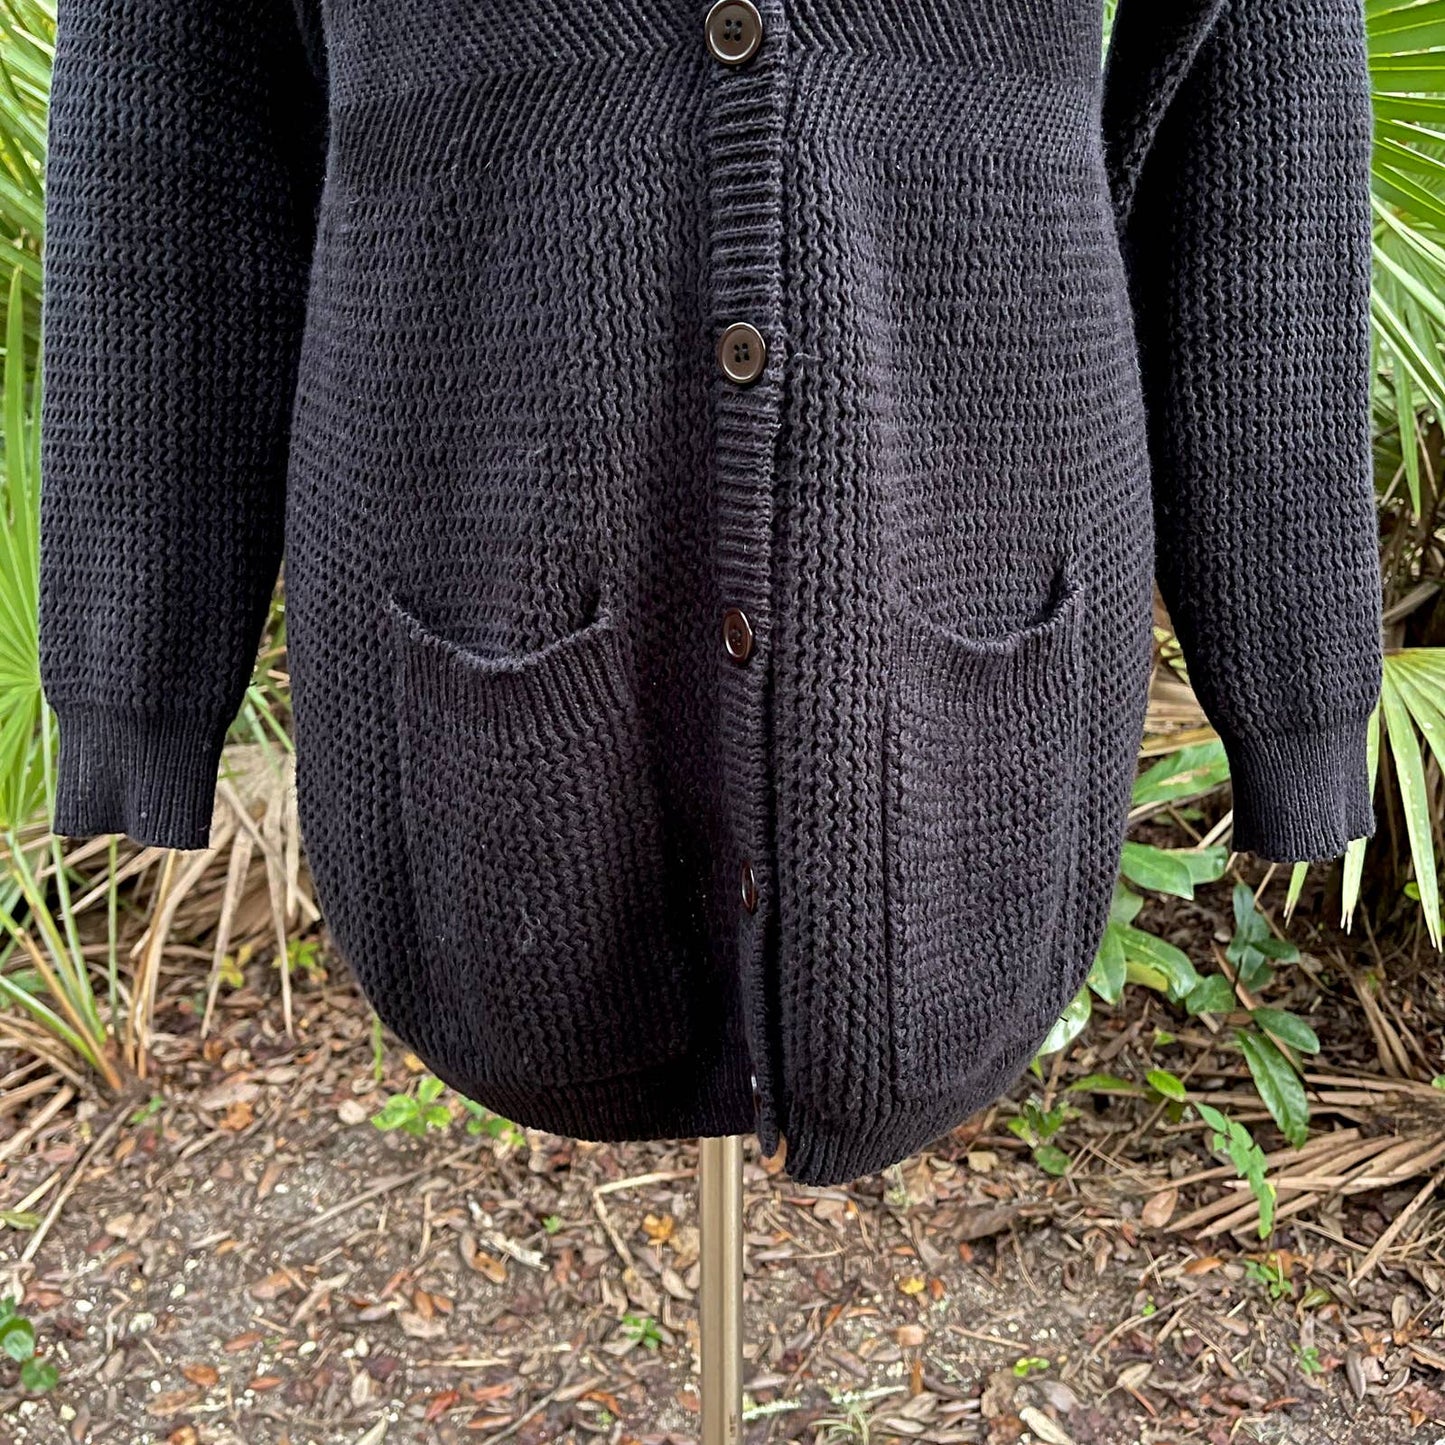 Vintage 80s Cotton Blend Caridigan Sweater Black Button Up Chevron Rinzi Size S